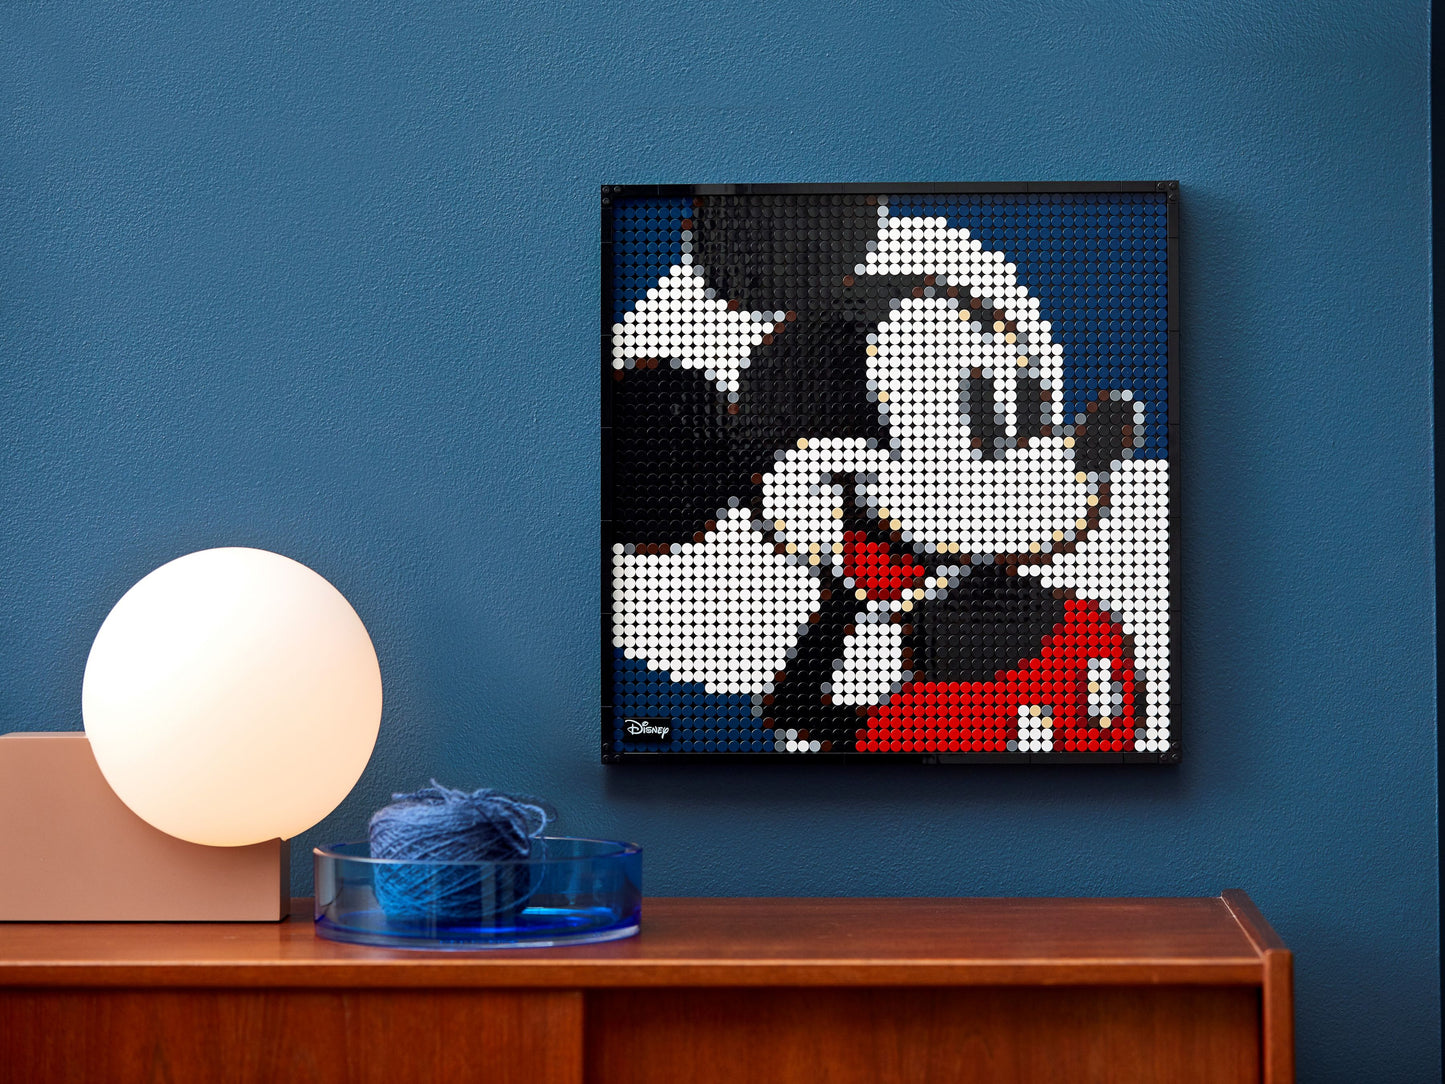 Art 31202 Disney's Mickey Mouse